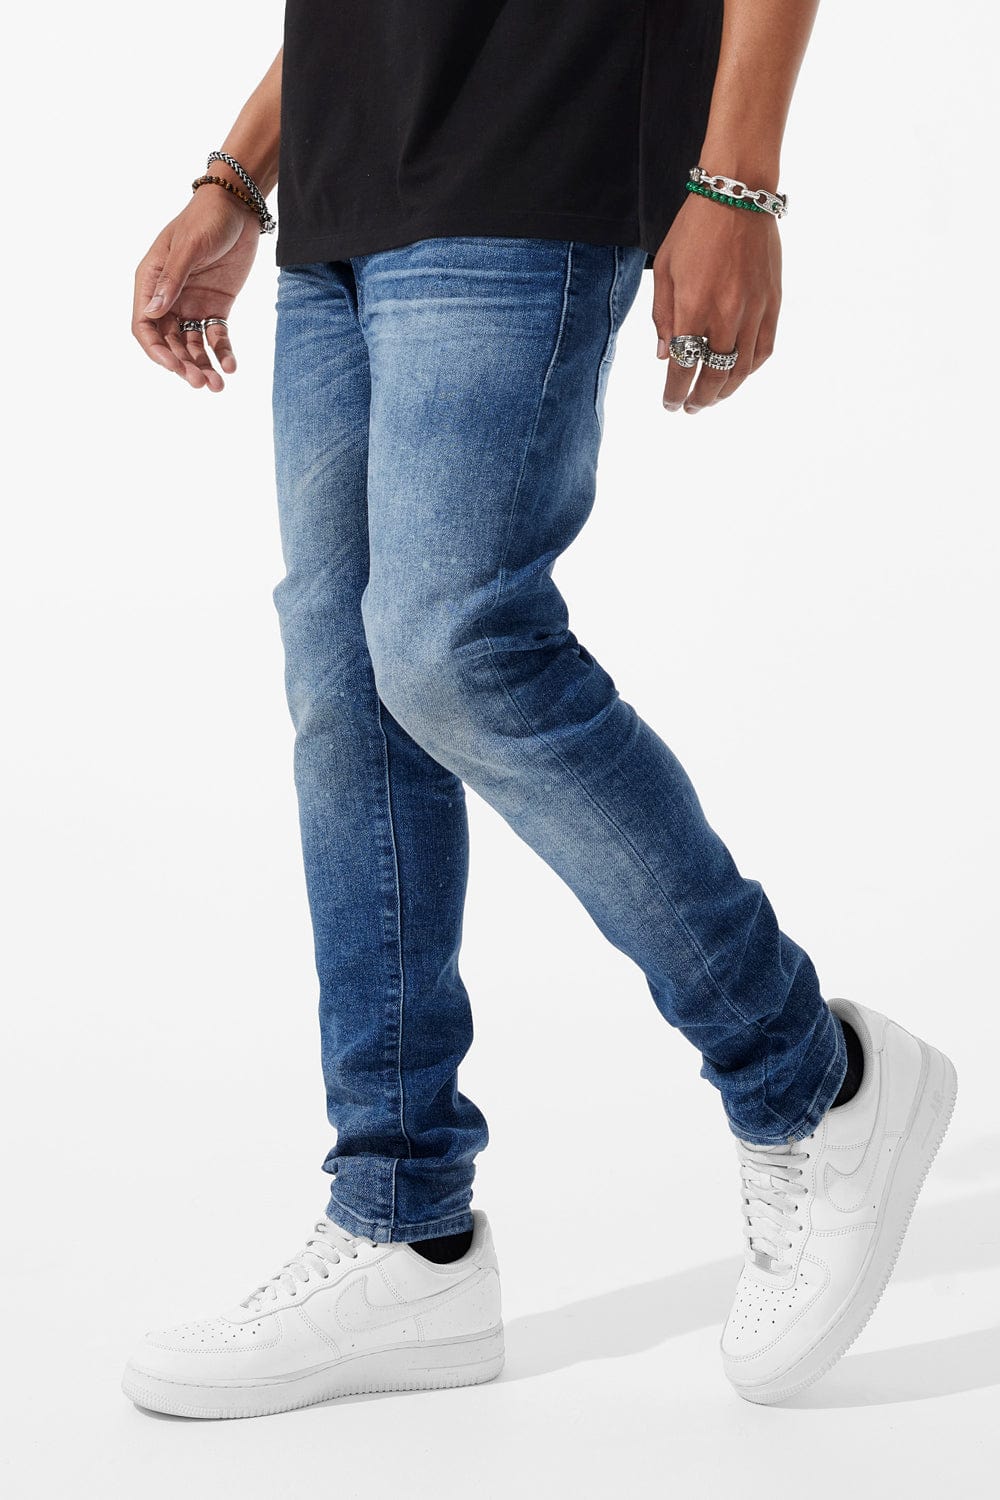 JC GERONIMO slim jeans Blue Steel js1189